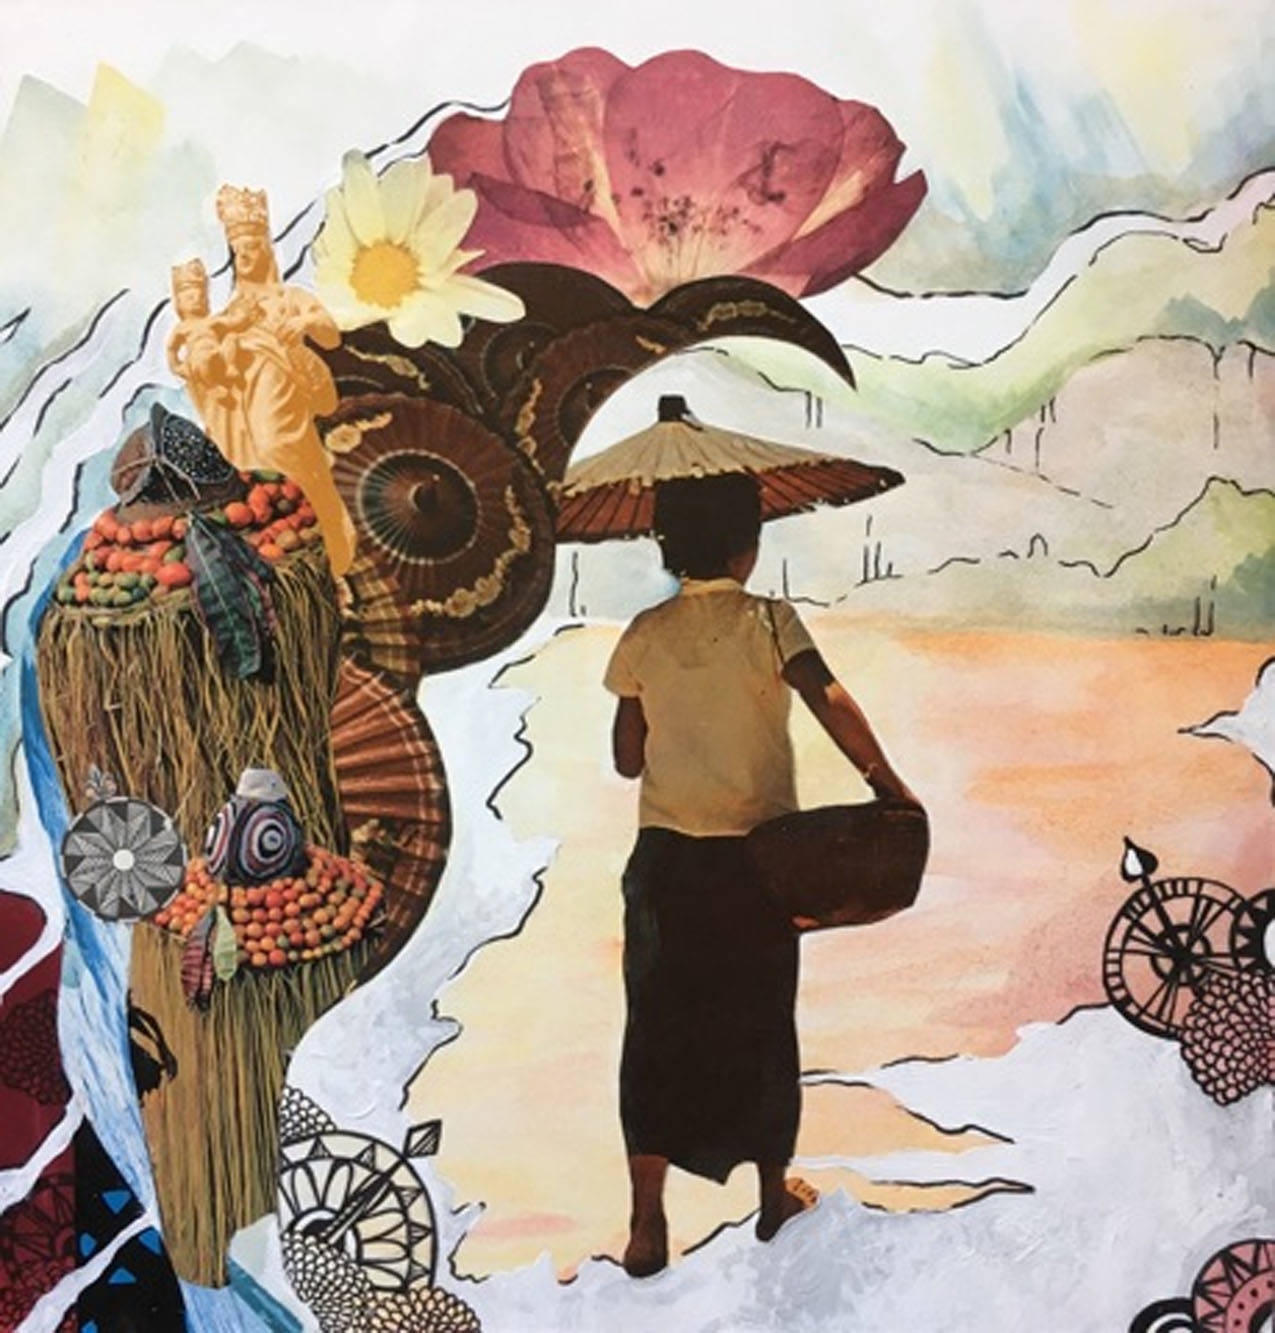 “Traveler” collage art by Megan Chalfant. Courtesy image.